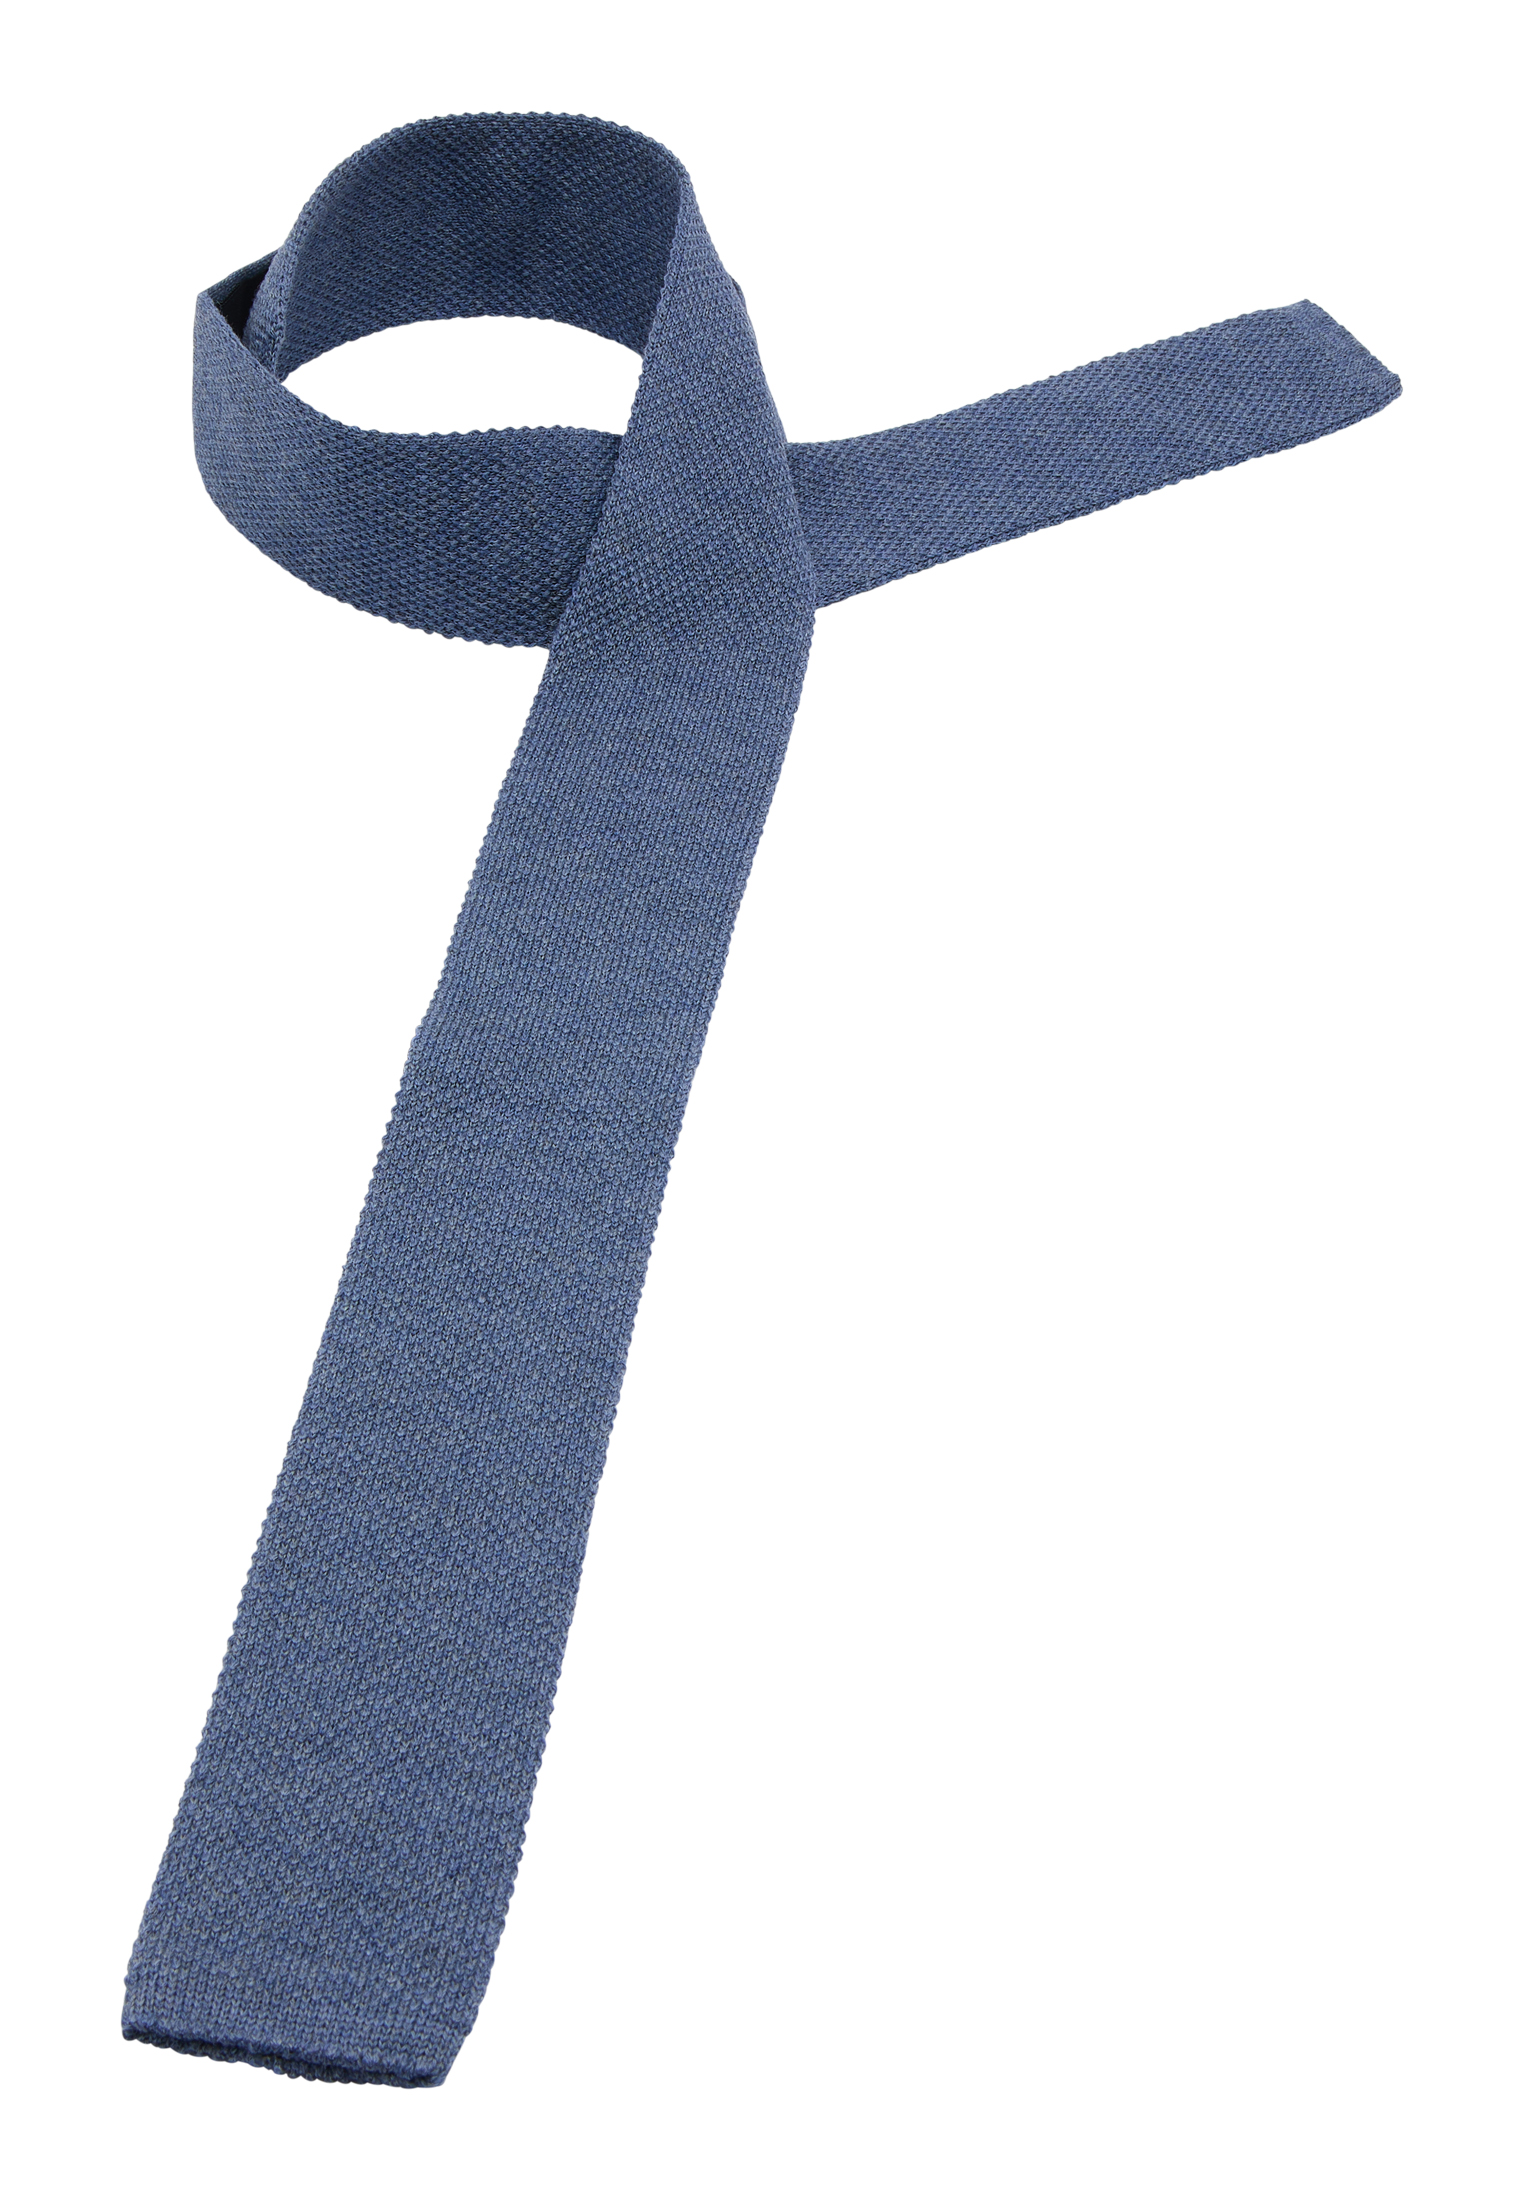 Krawatte in | strukturiert 142 1AC01880-01-81-142 | dunkelblau dunkelblau 